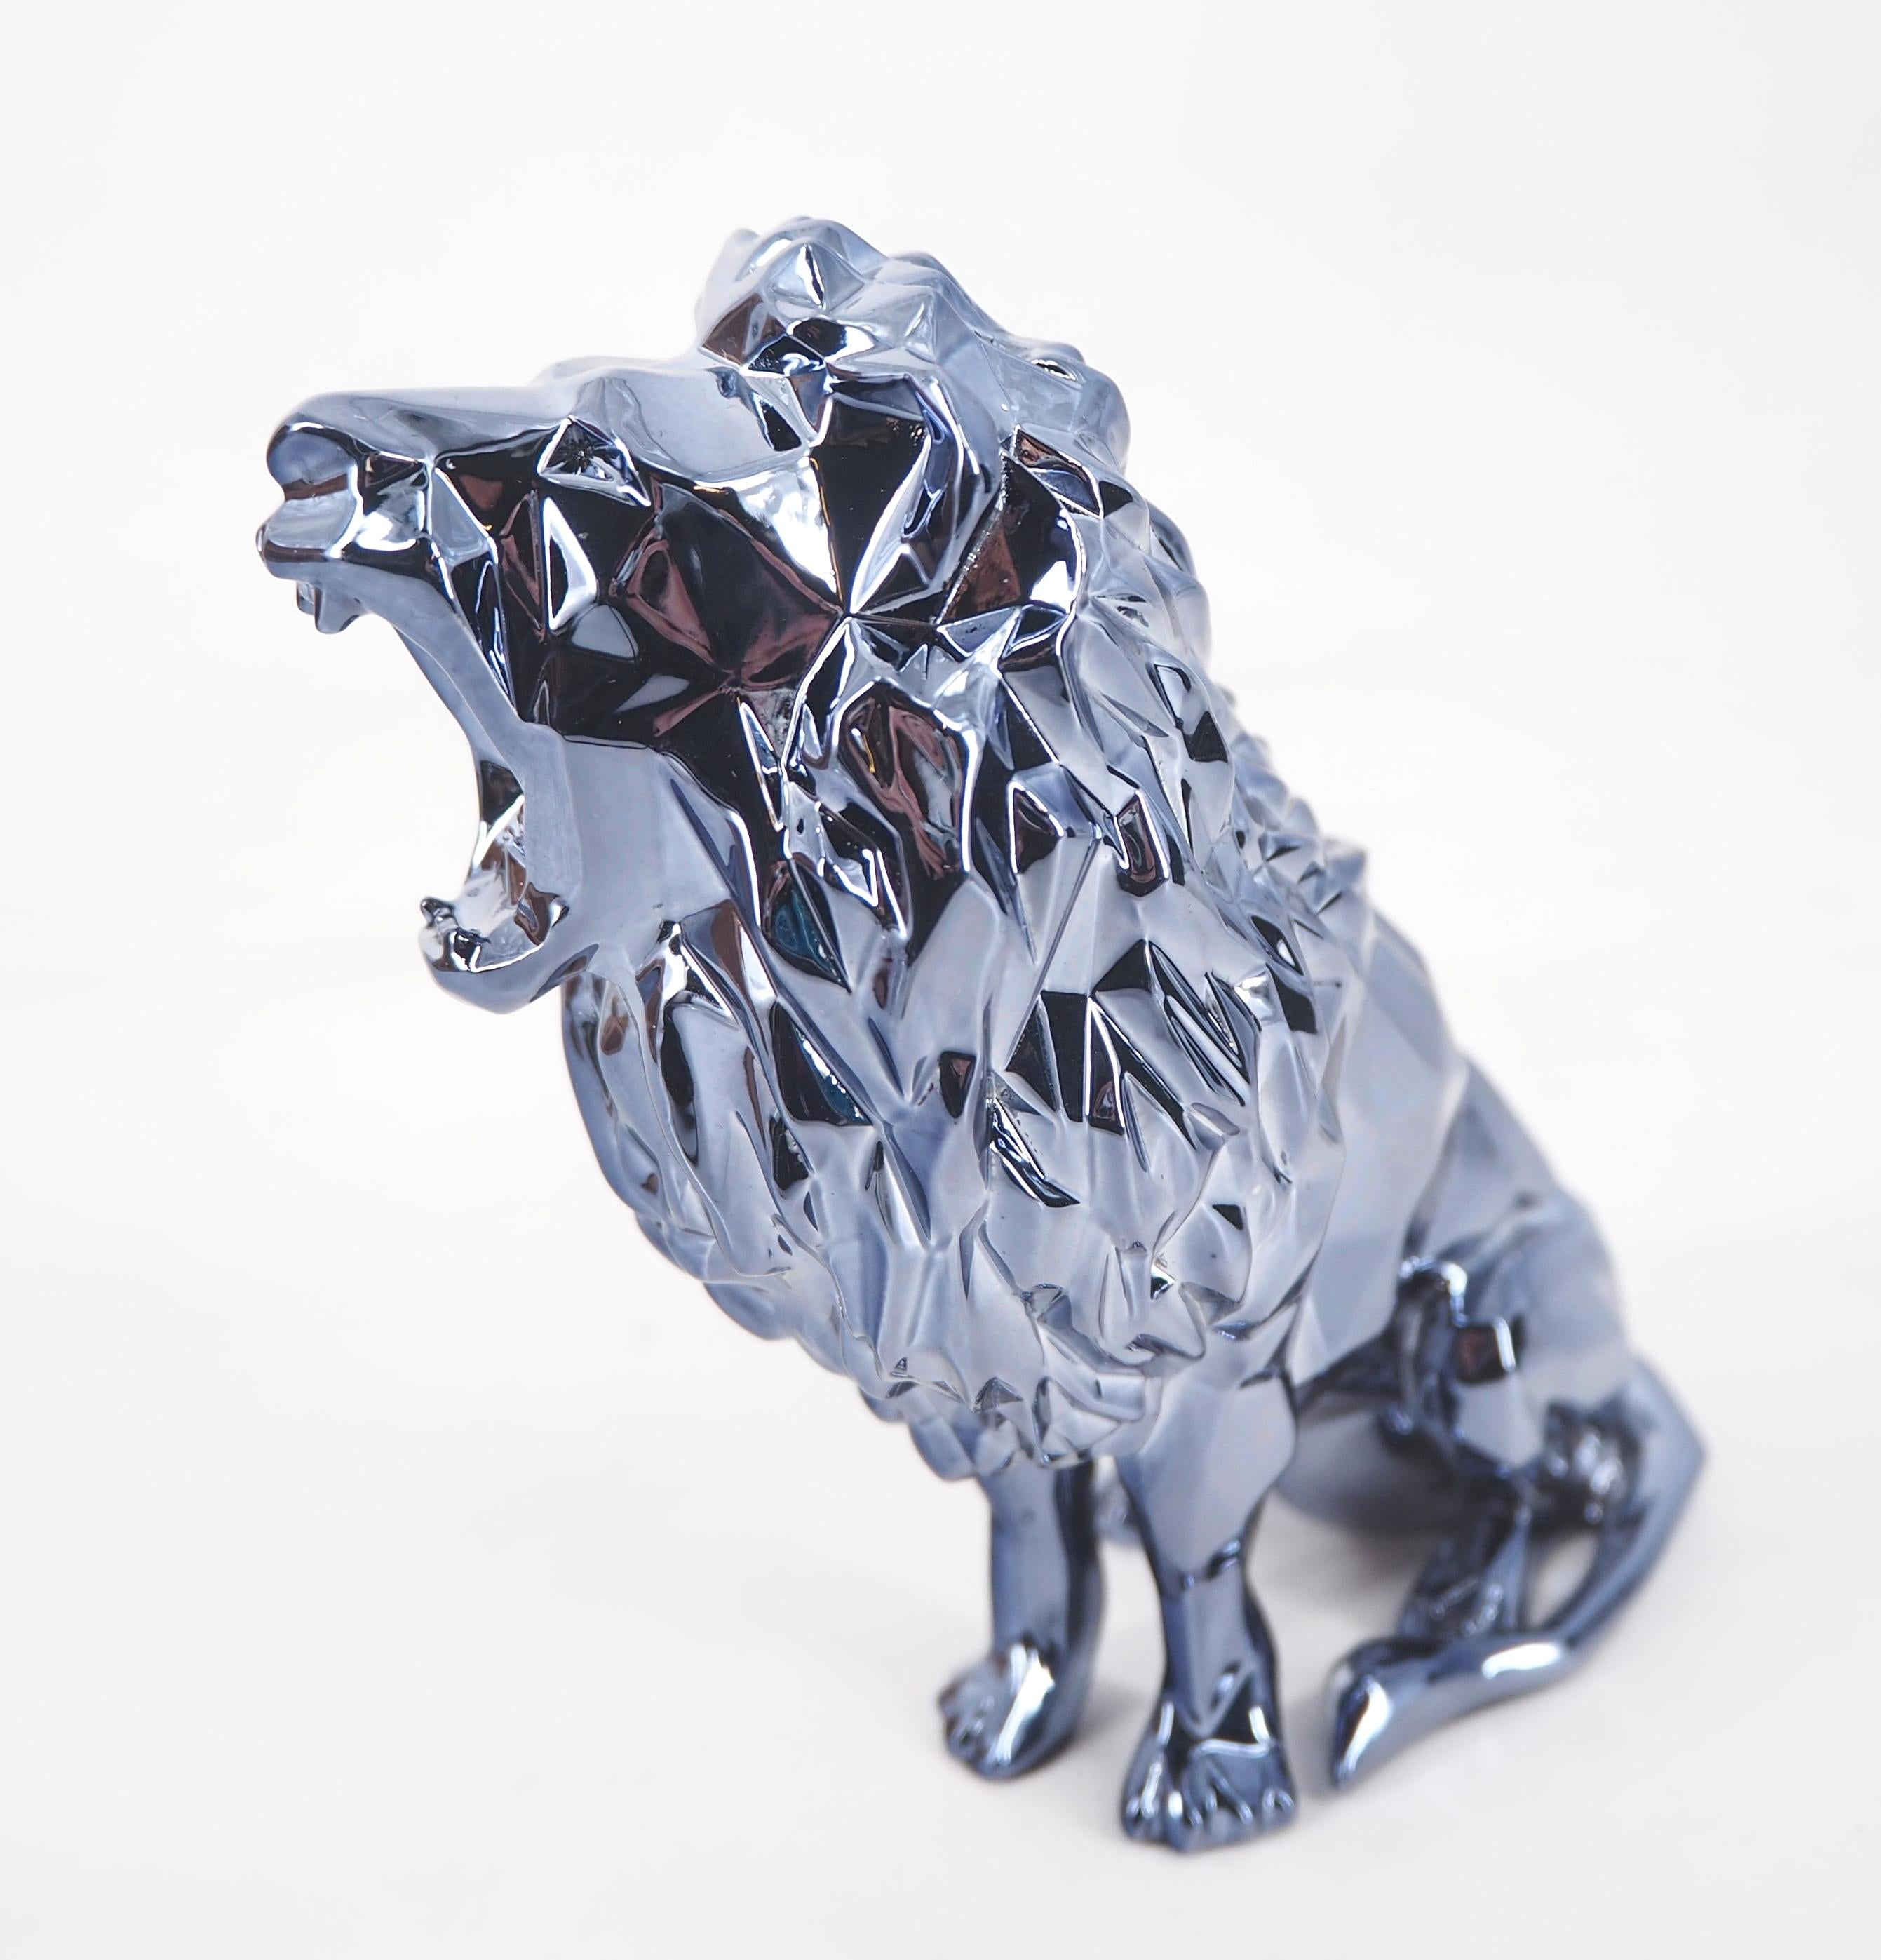 Roaring Lion Spirit (Petrol edition) - Sculpture in original box with artist coa For Sale 2